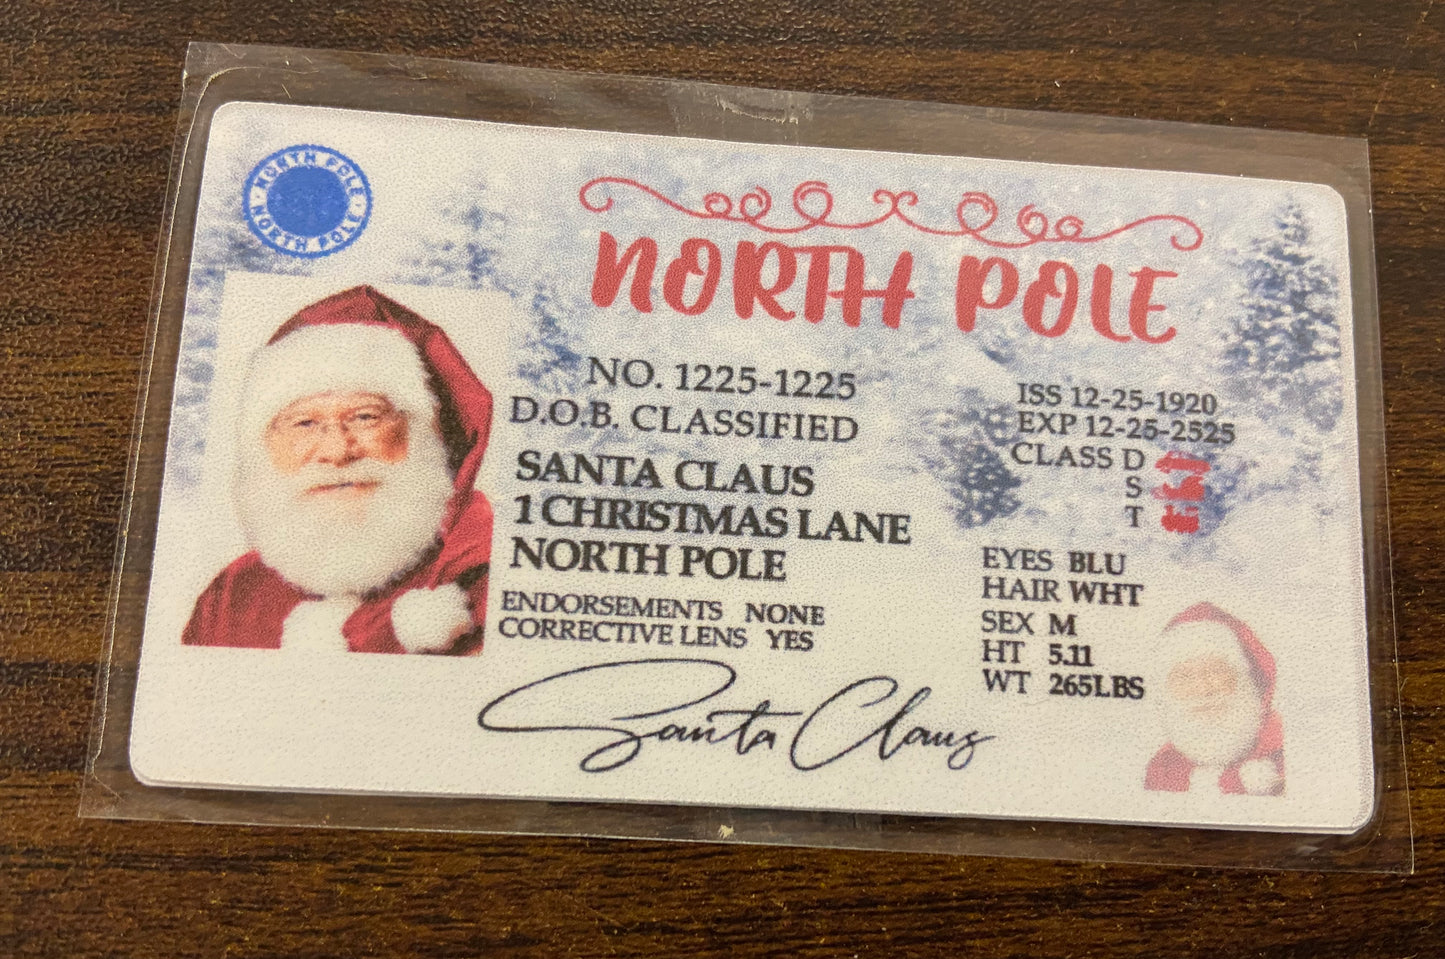 Santa’s Drivers License